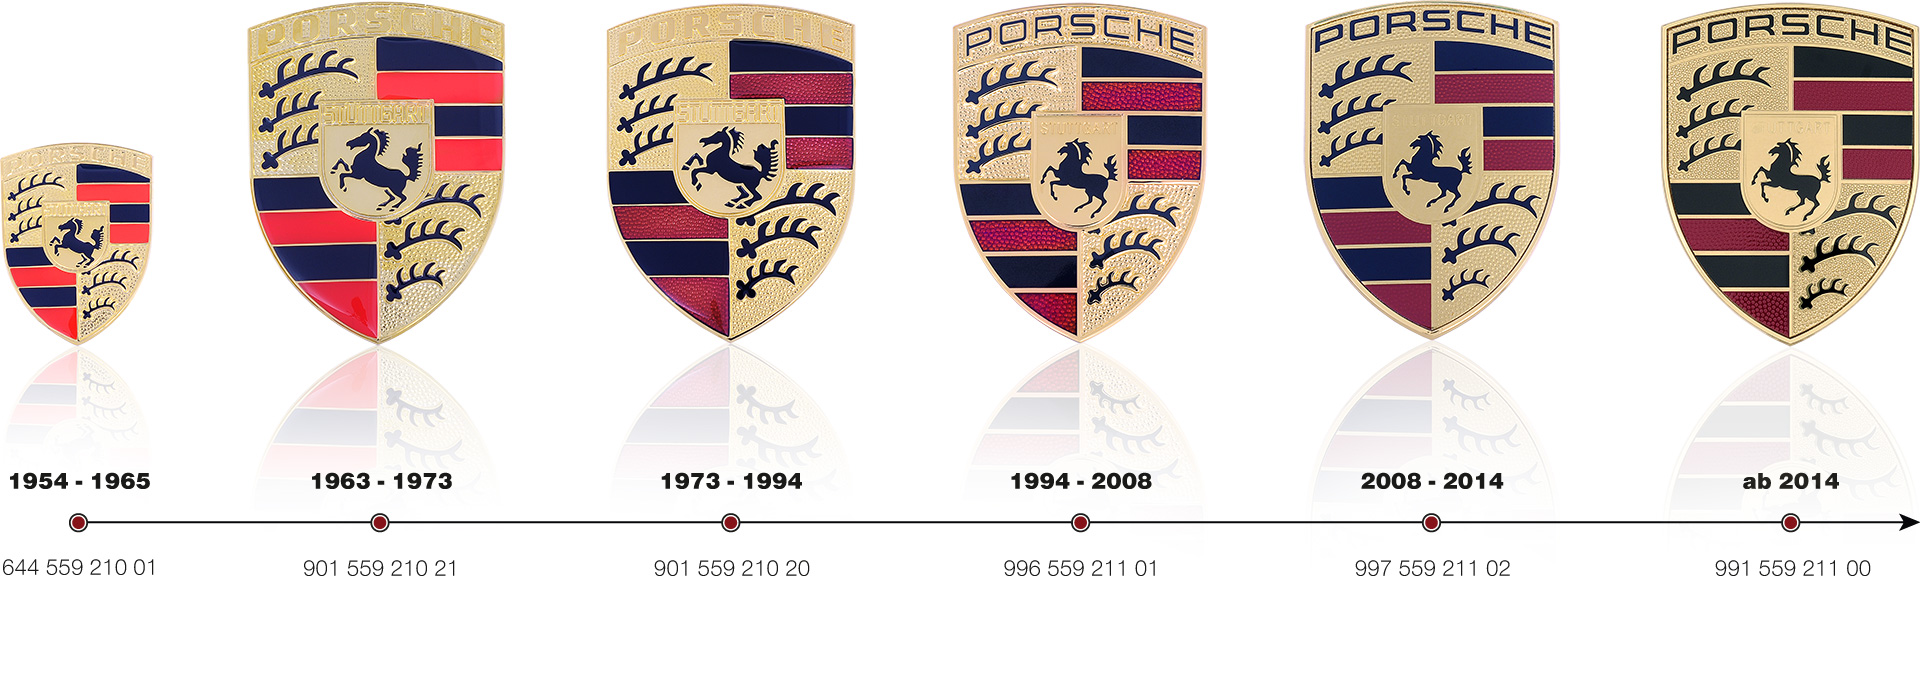 The Evolution of the Porsche Crest